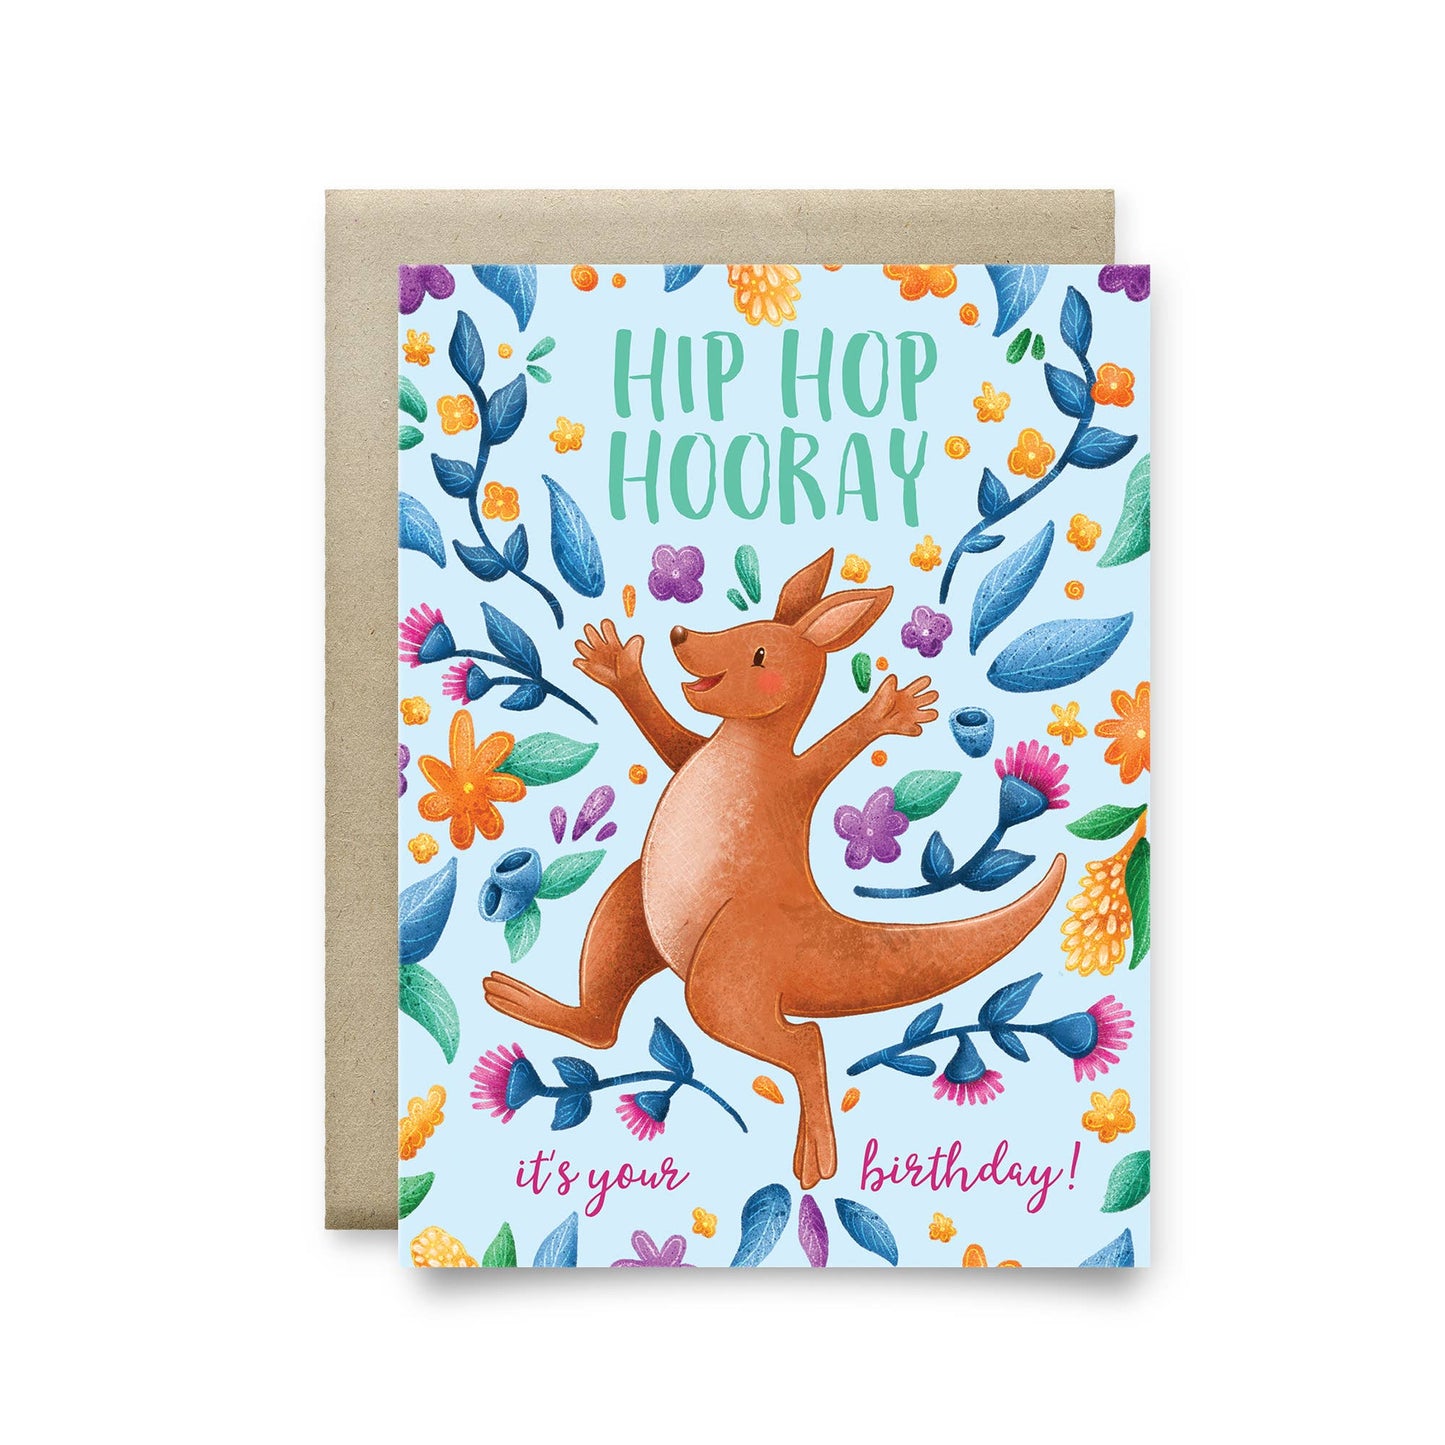 Stray Leaves- Hip Hop Hooray Kangaroo birthday card